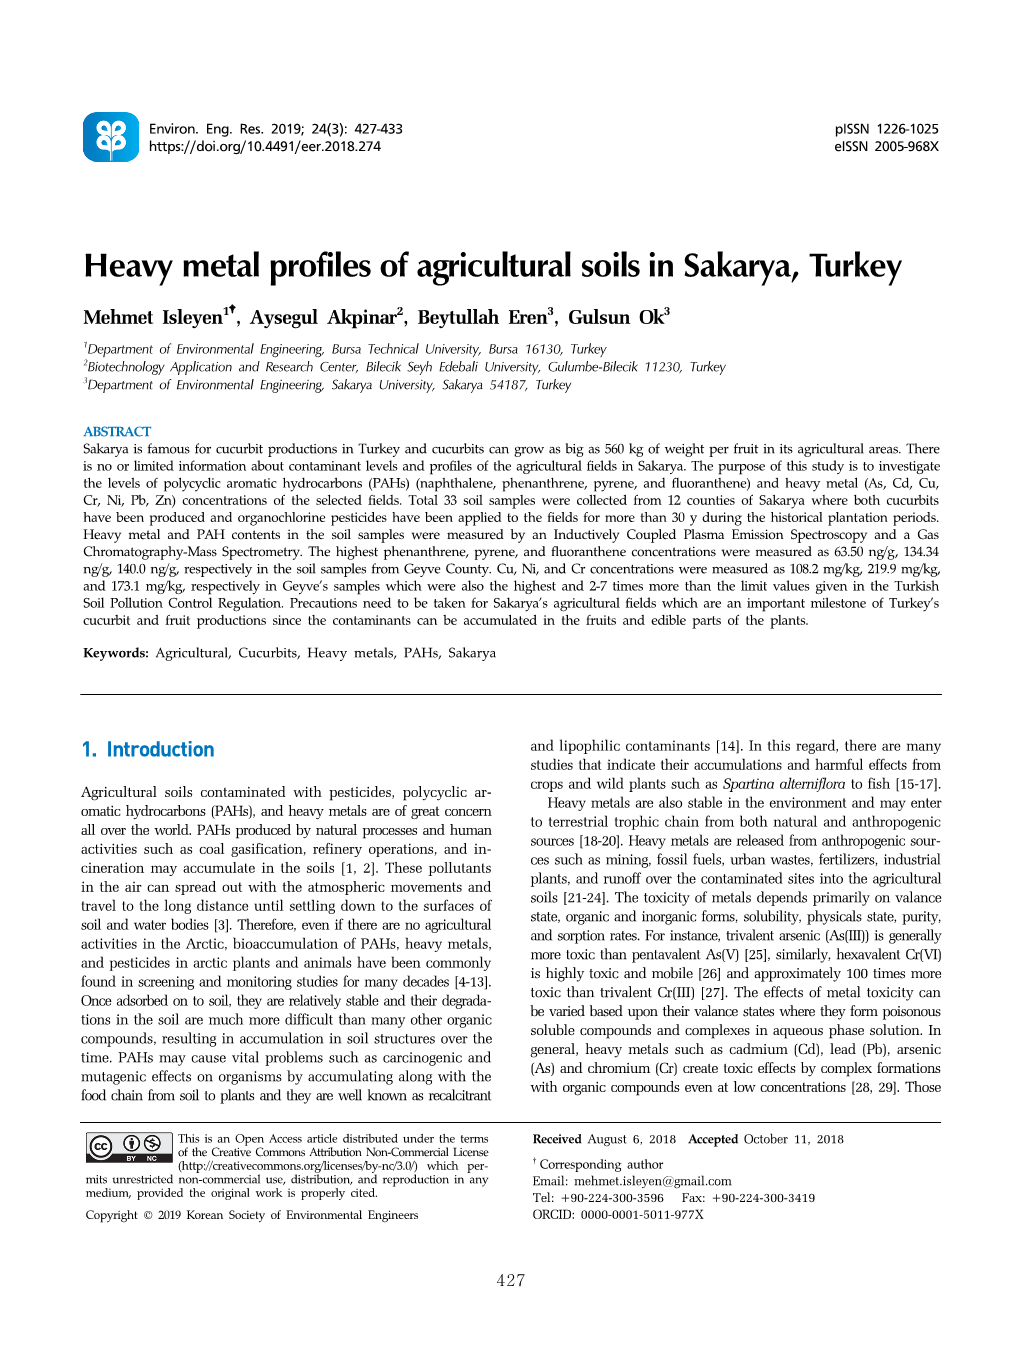 Heavy Metal Profiles of Agricultural Soils in Sakarya, Turkey